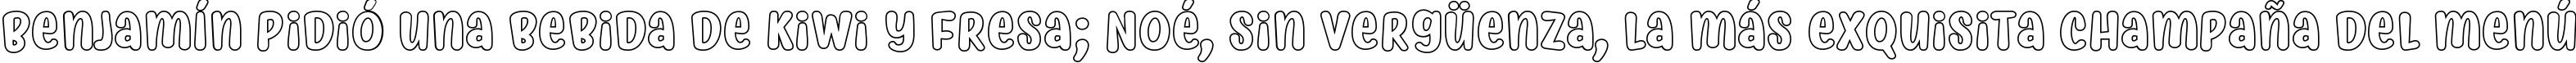 Пример написания шрифтом Myfrida Hollow текста на испанском